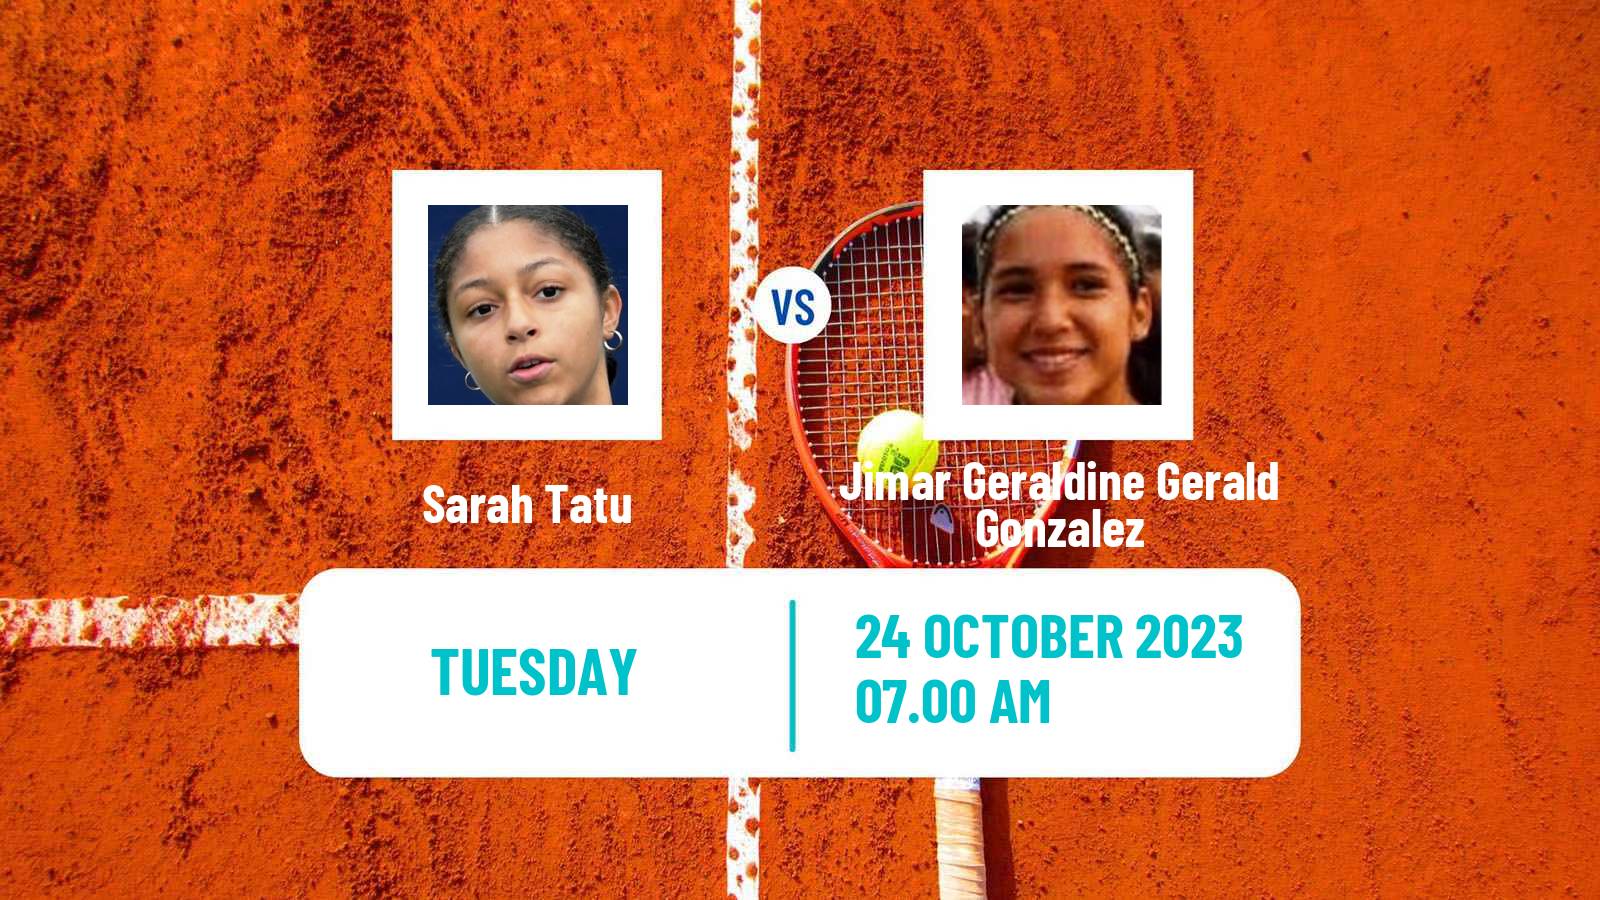 Tennis ITF W15 Villena Women Sarah Tatu - Jimar Geraldine Gerald Gonzalez